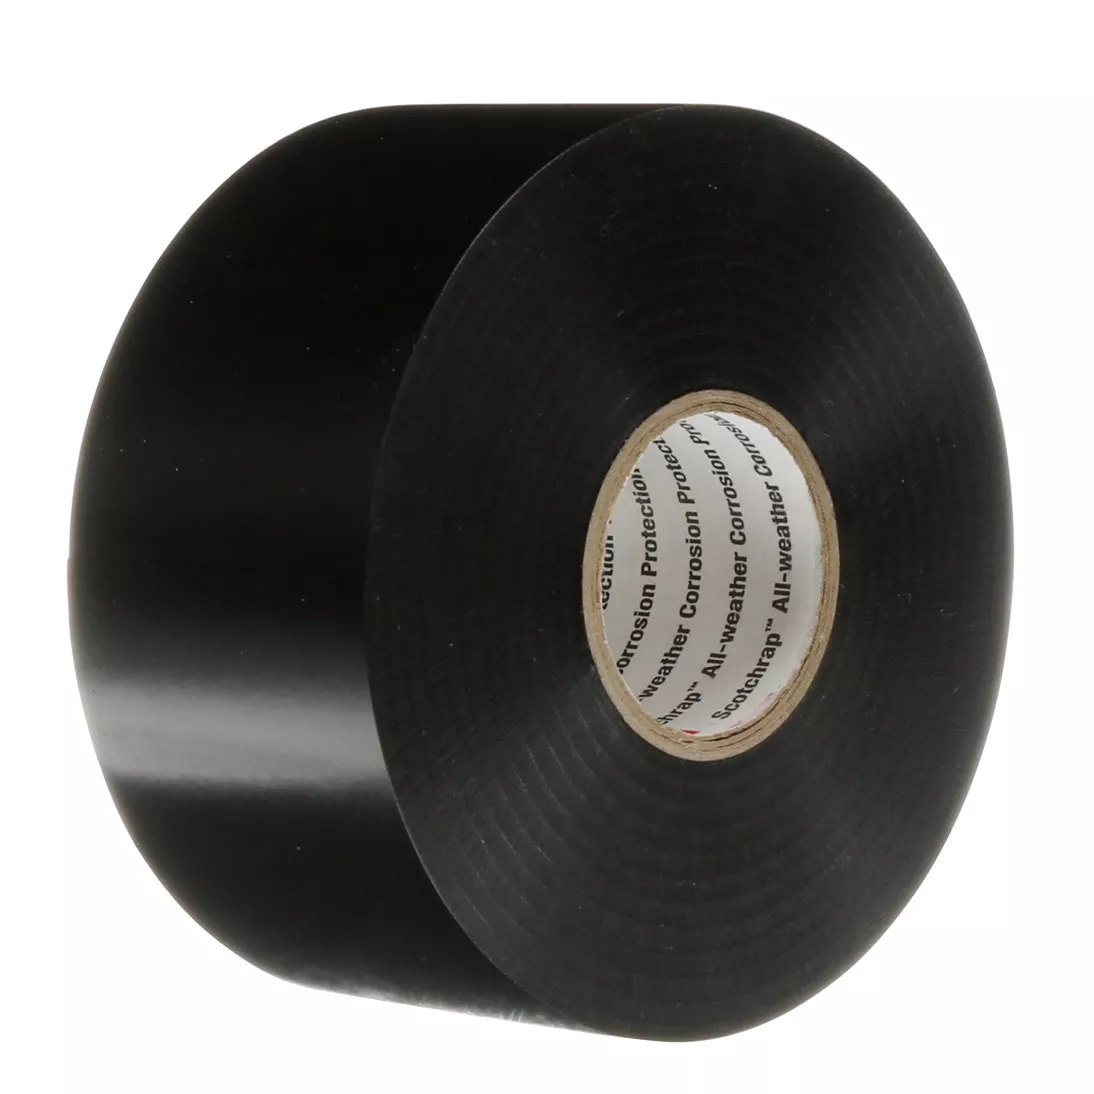 3M™ Scotchrap™ Vinyl Corrosion Protection Tape 50, 1-1/2 in x 100 ft,
1.5 in core, Unprinted, Black, 1 roll/carton, 35 rolls/Case